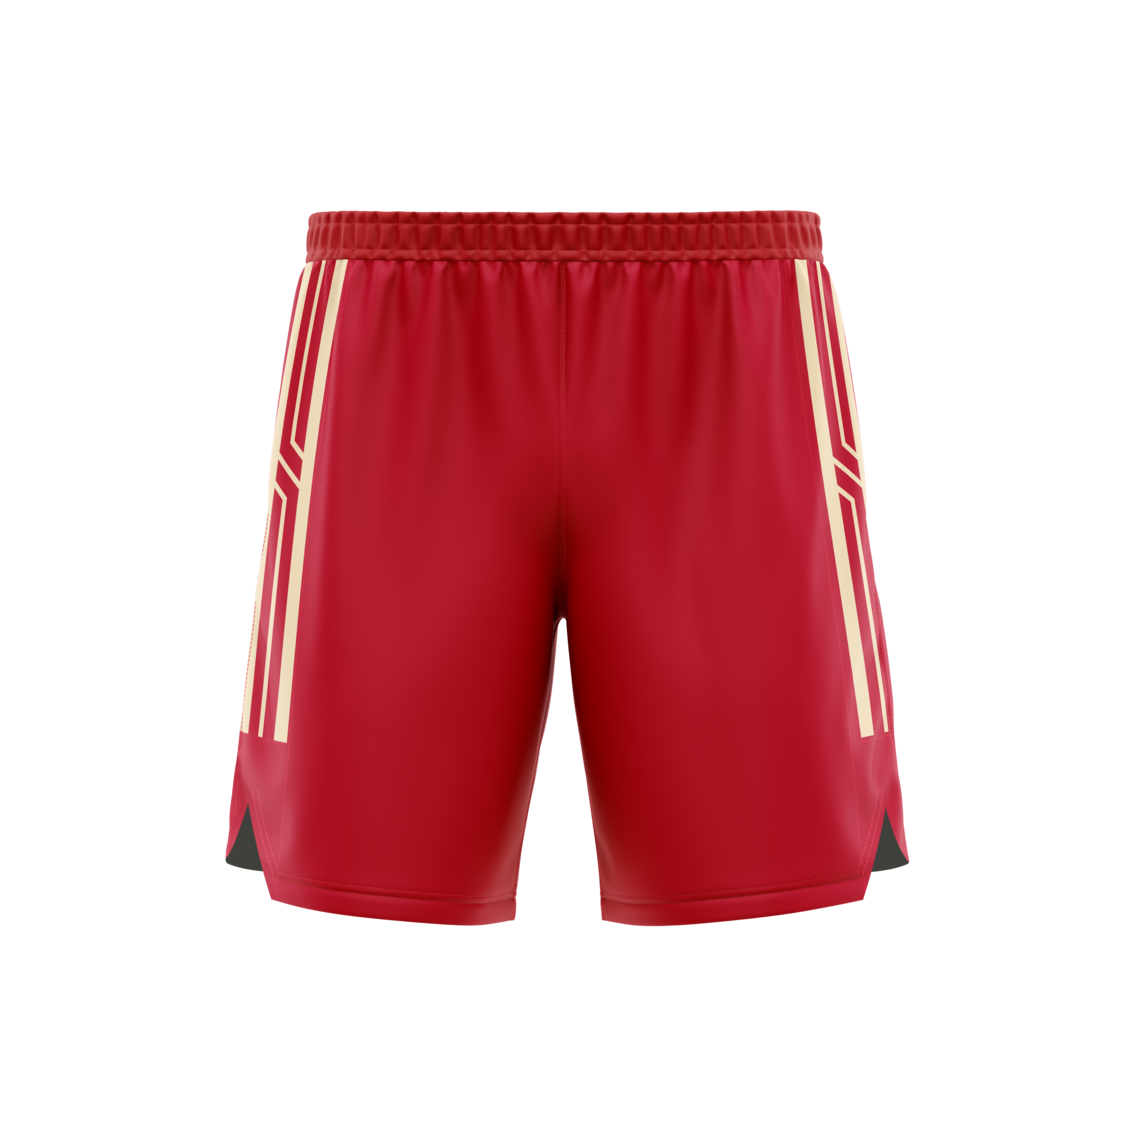 Juaraga Persija Short Pants - Player Issue Home Player Fervor Knit - Merah